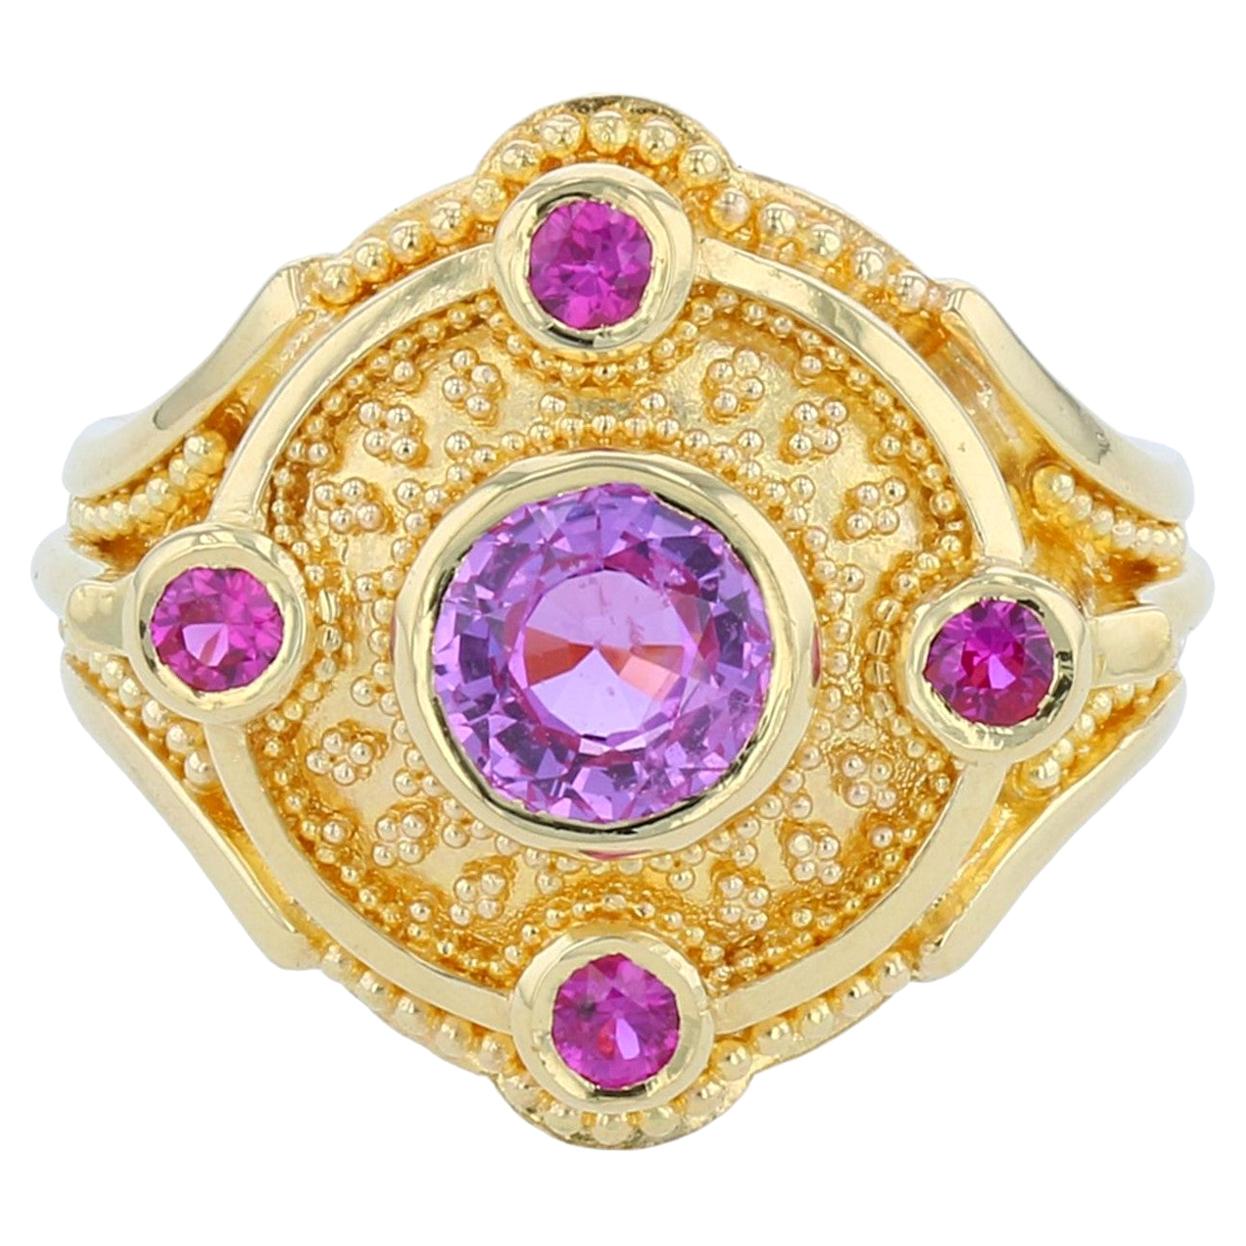 Kent Raible's 18 Karat Gold Pink Sapphire Cocktail Ring with Fine Granulation